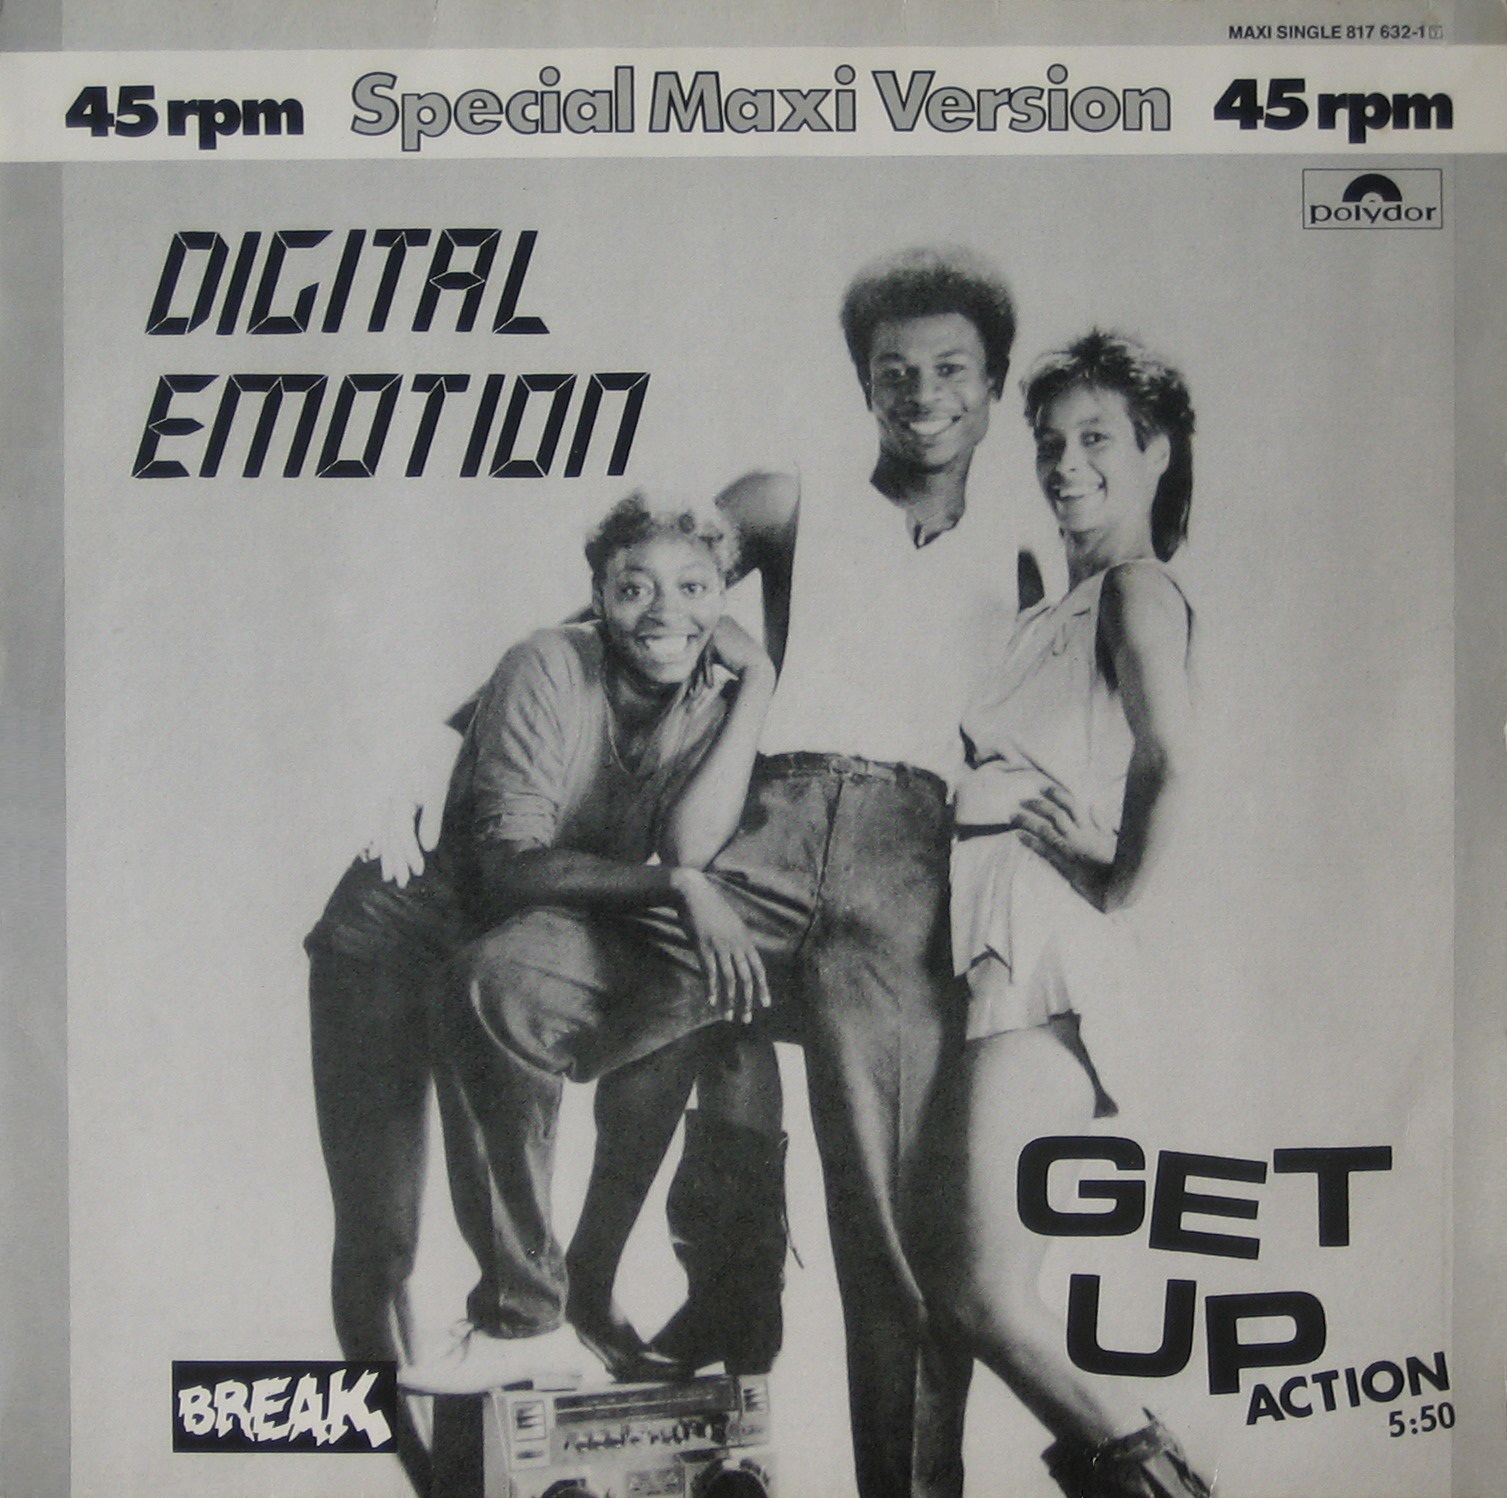 Digital Emotion - Get Up Action (Vinyl 12'') (Polydor - 817 632-1) Germany (1983) FLAC